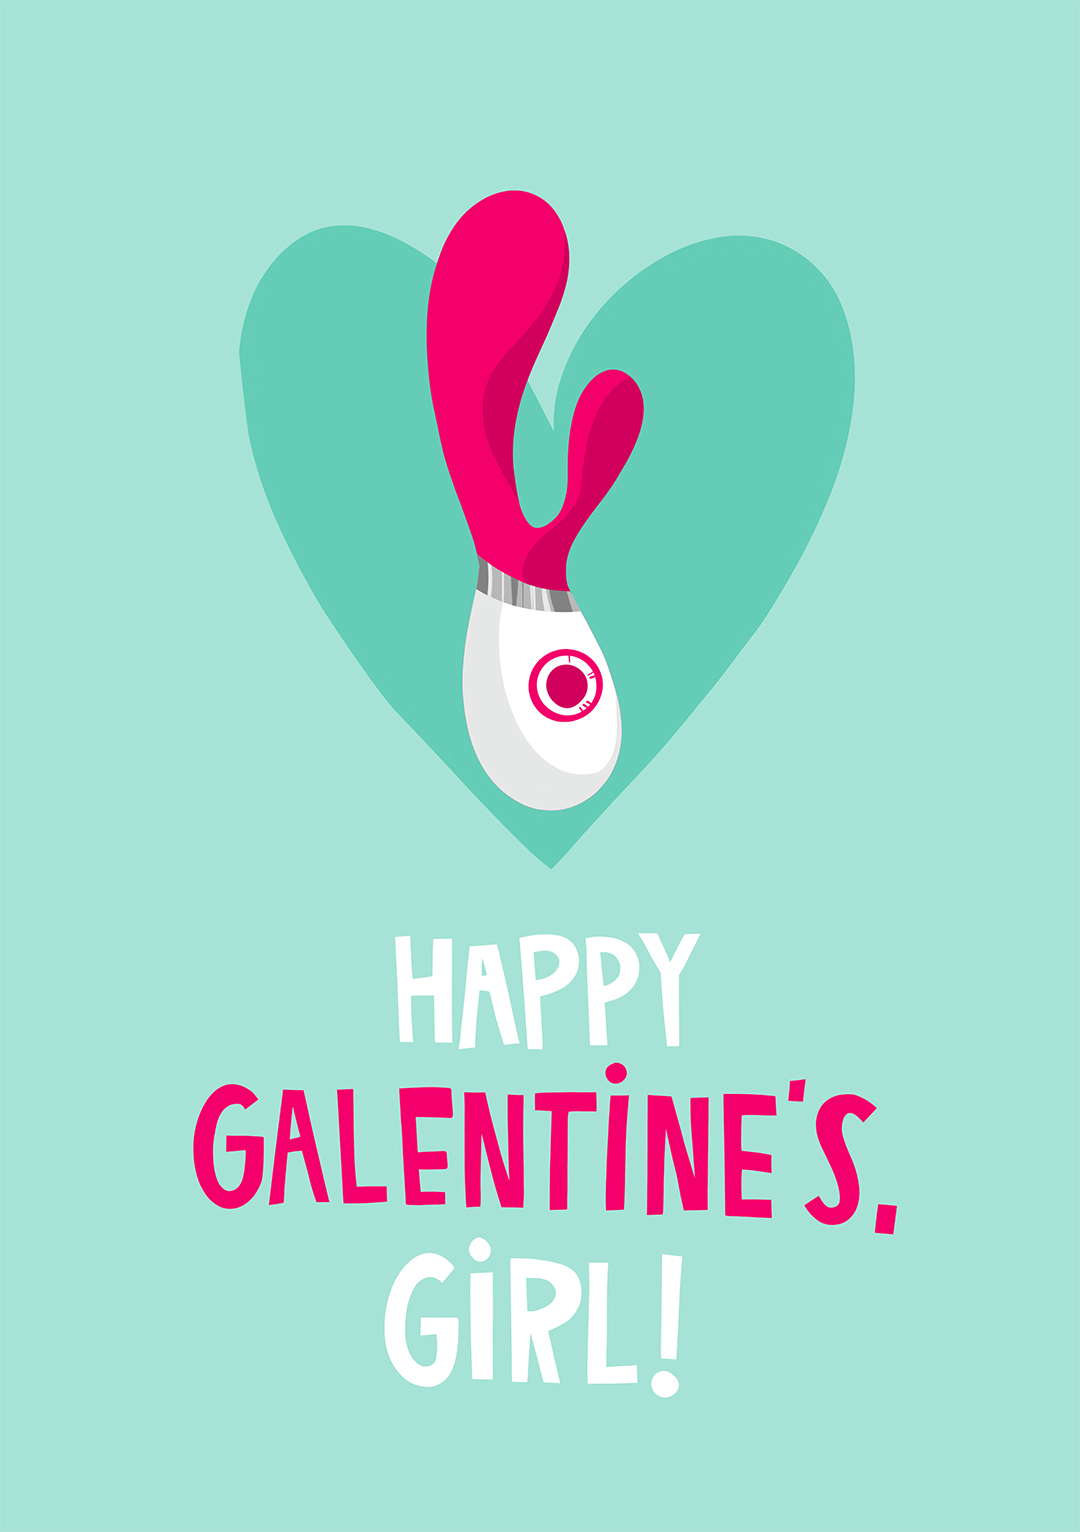 Happy Galentine's Funny Toy - Valentine's Day Card